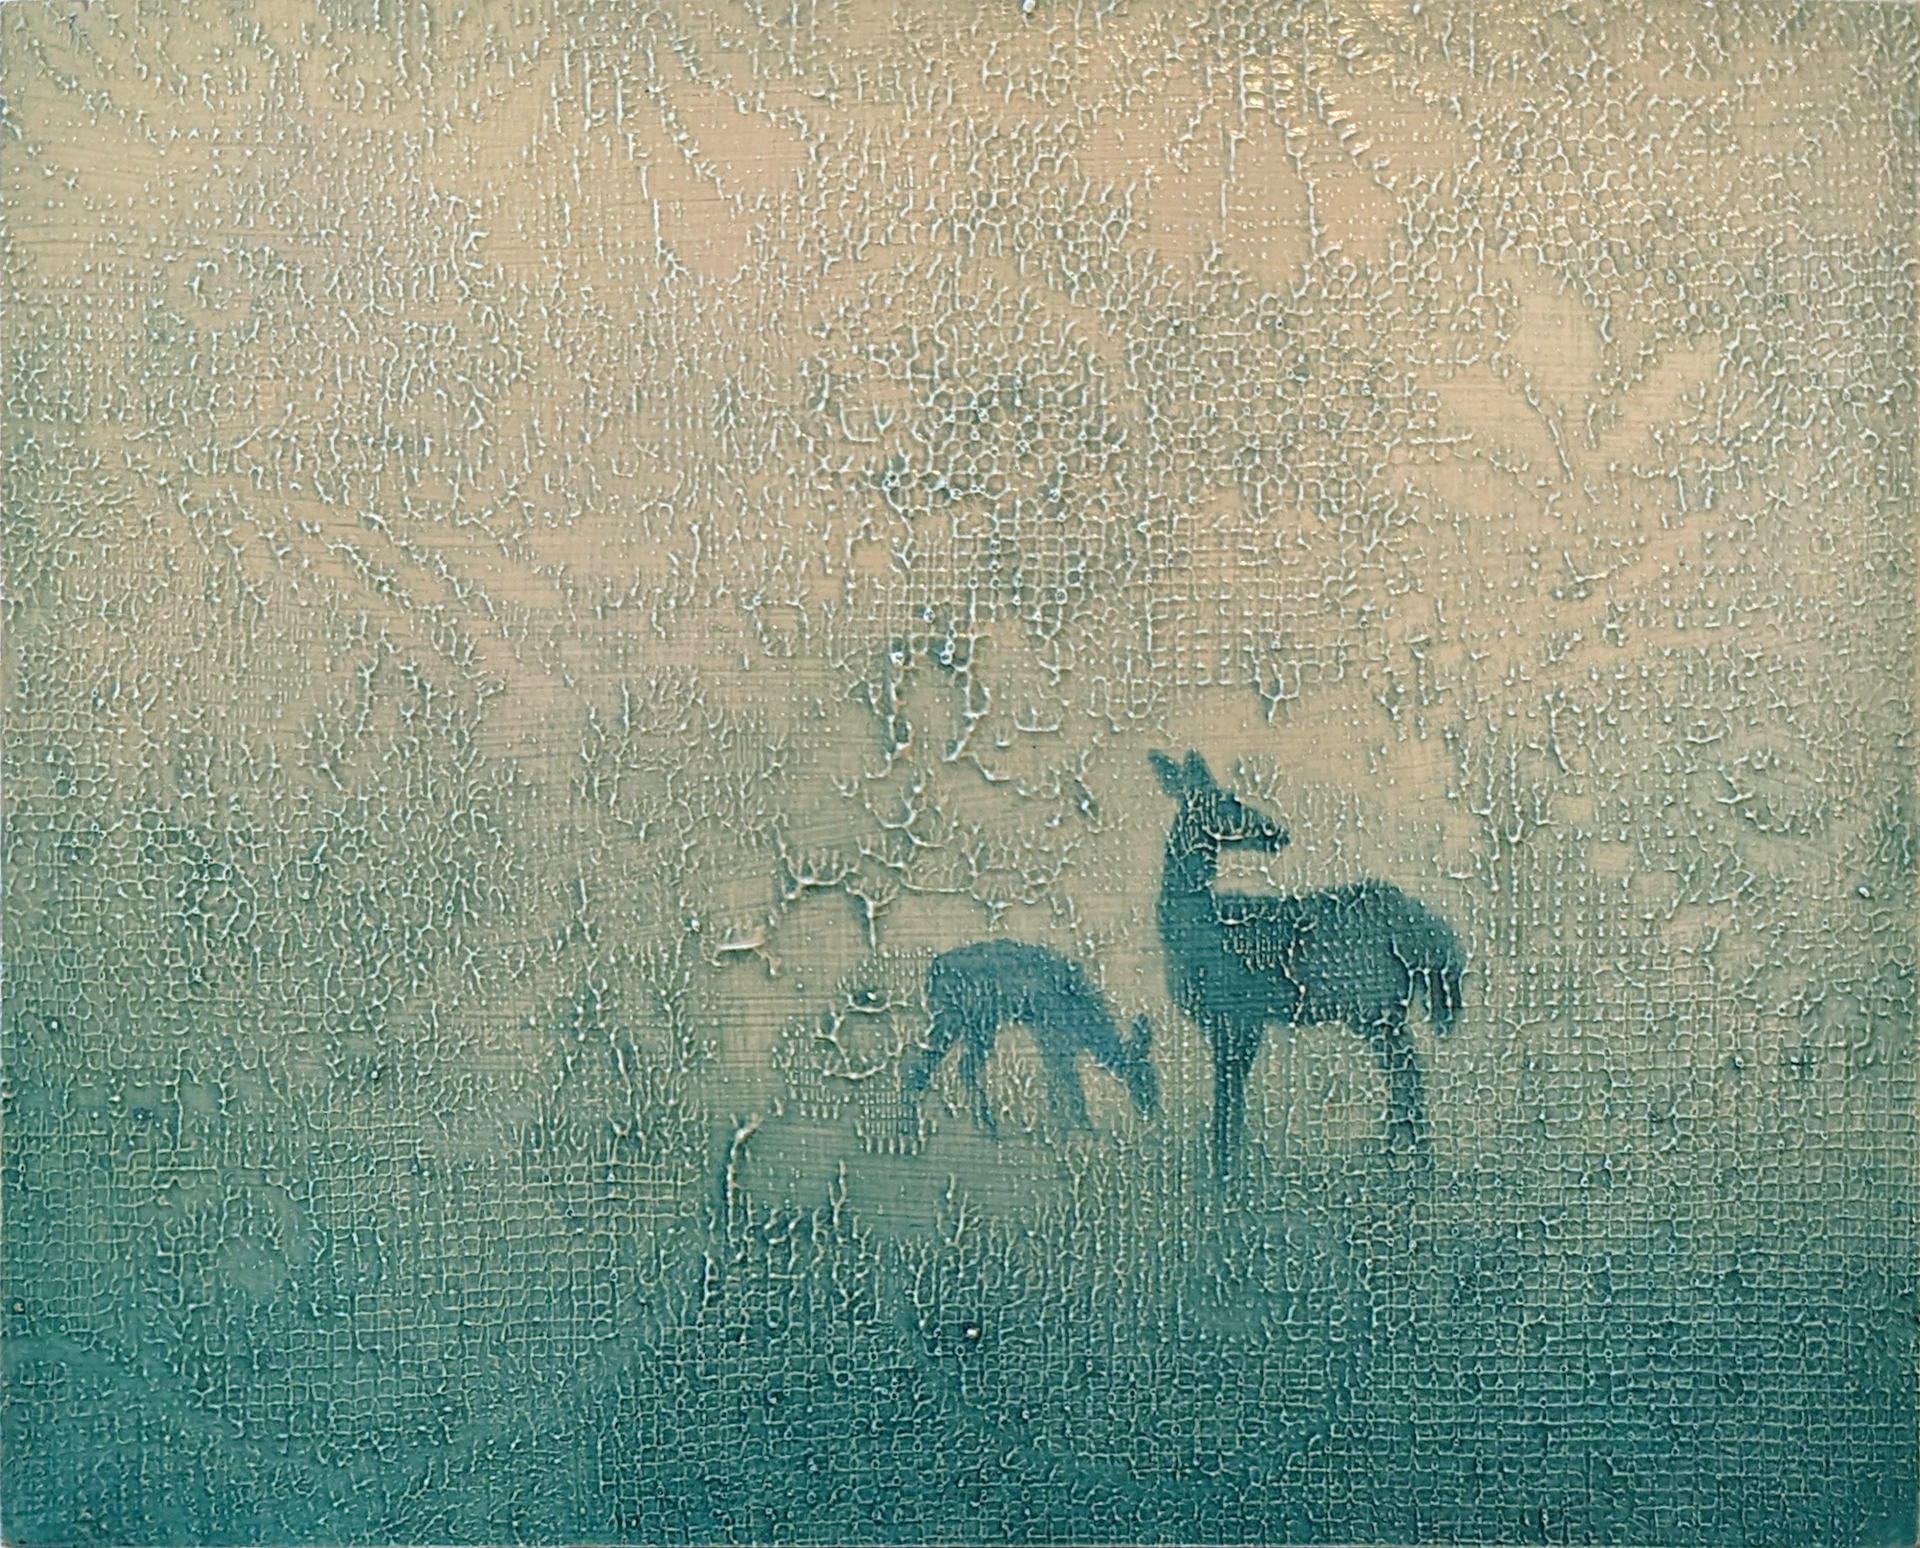 Two Deer by Susan Hall